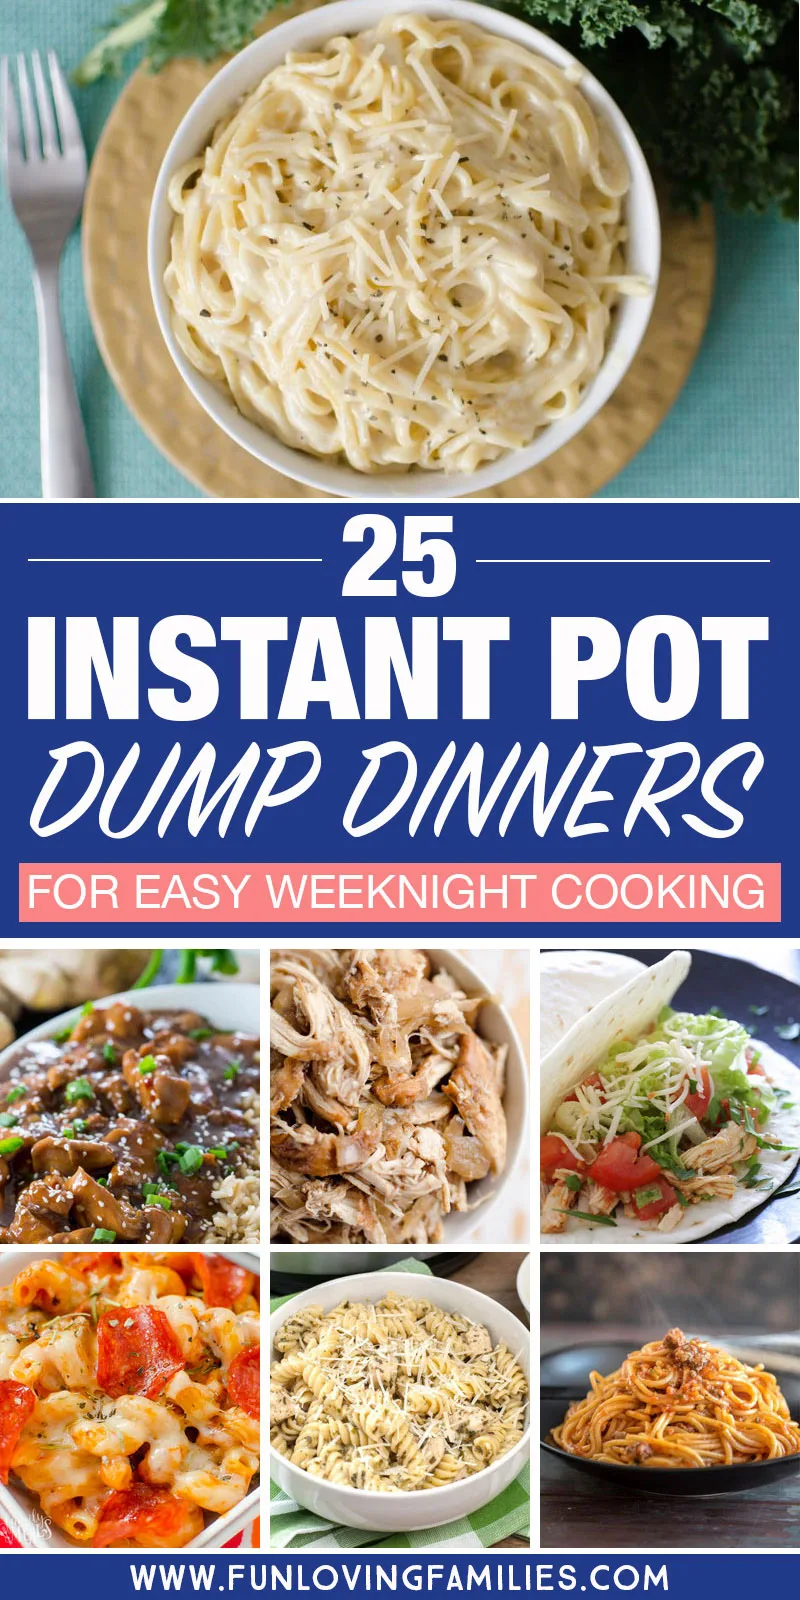 https://www.funlovingfamilies.com/wp-content/uploads/2019/11/Instant-pot-dump-recipes-dinner.jpg.webp